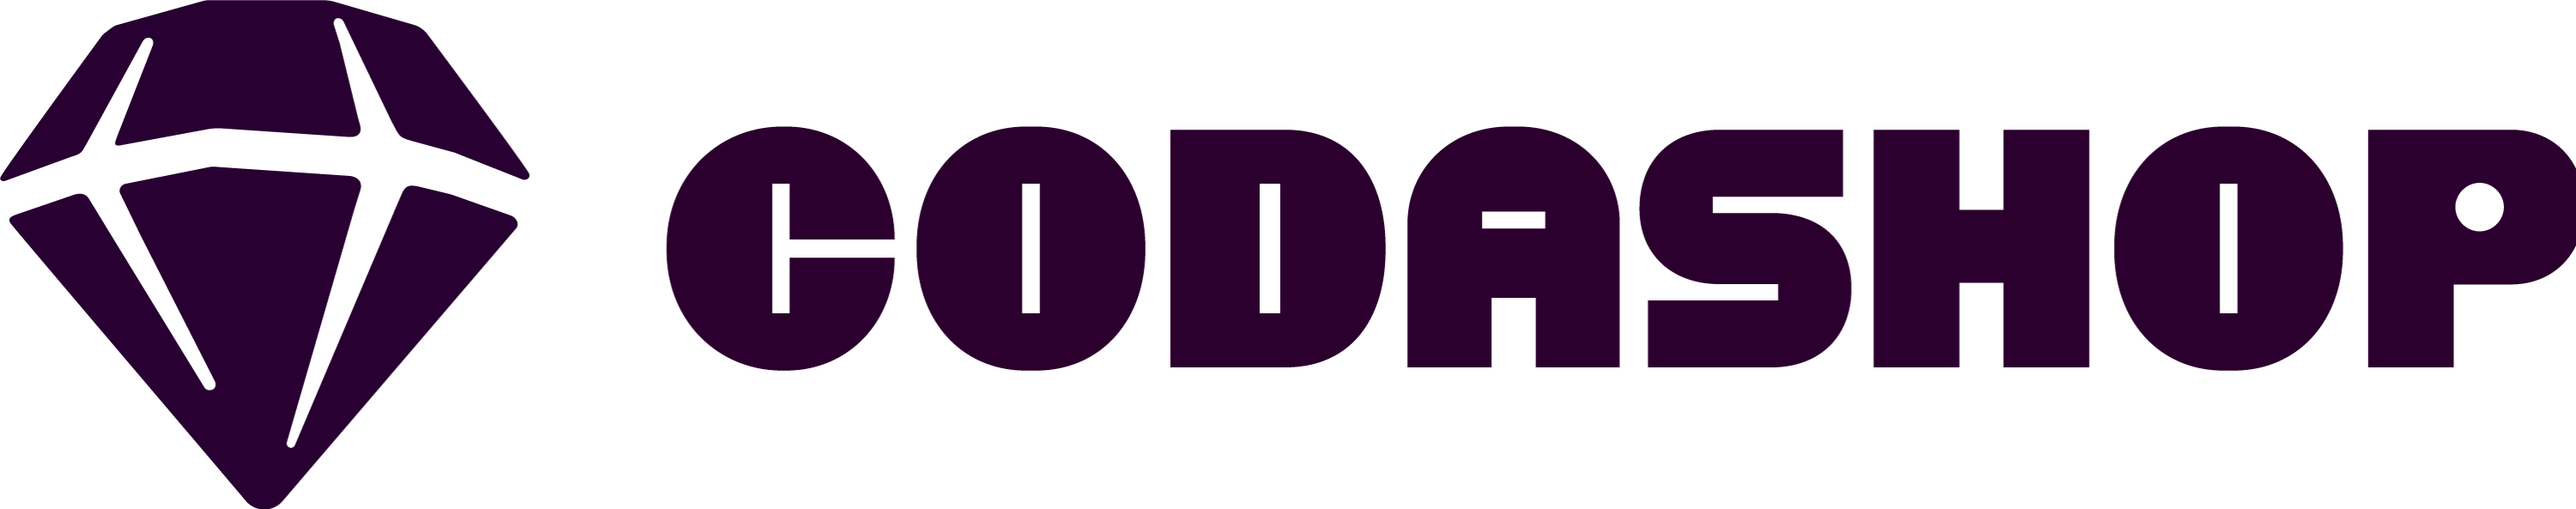 Codashop-logo-stack-darkmatter__1_.png